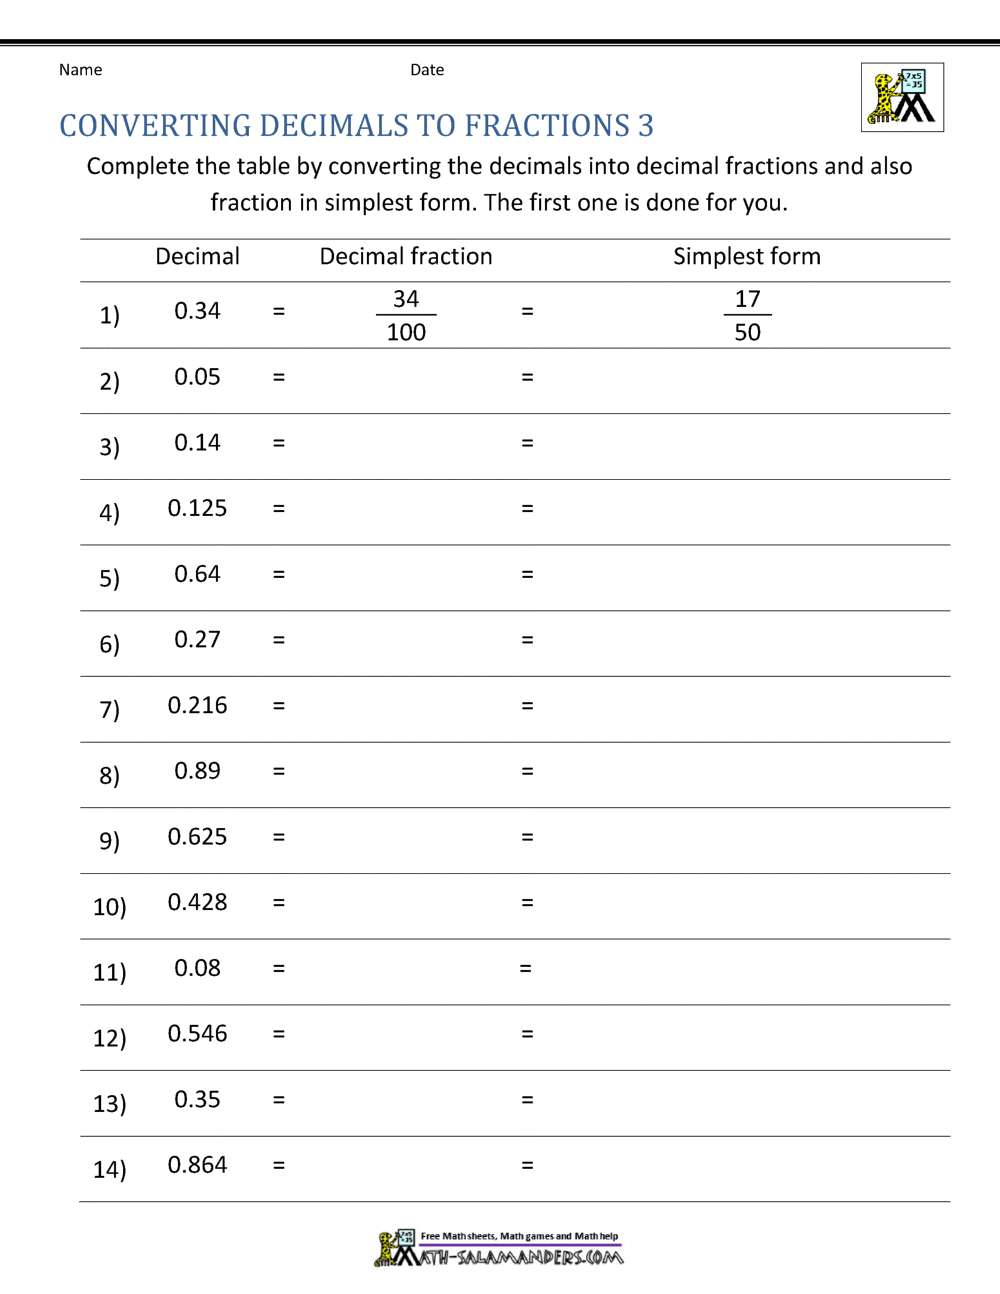 Converting Decimals to Fractions Worksheet Regarding Comparing Fractions And Decimals Worksheet